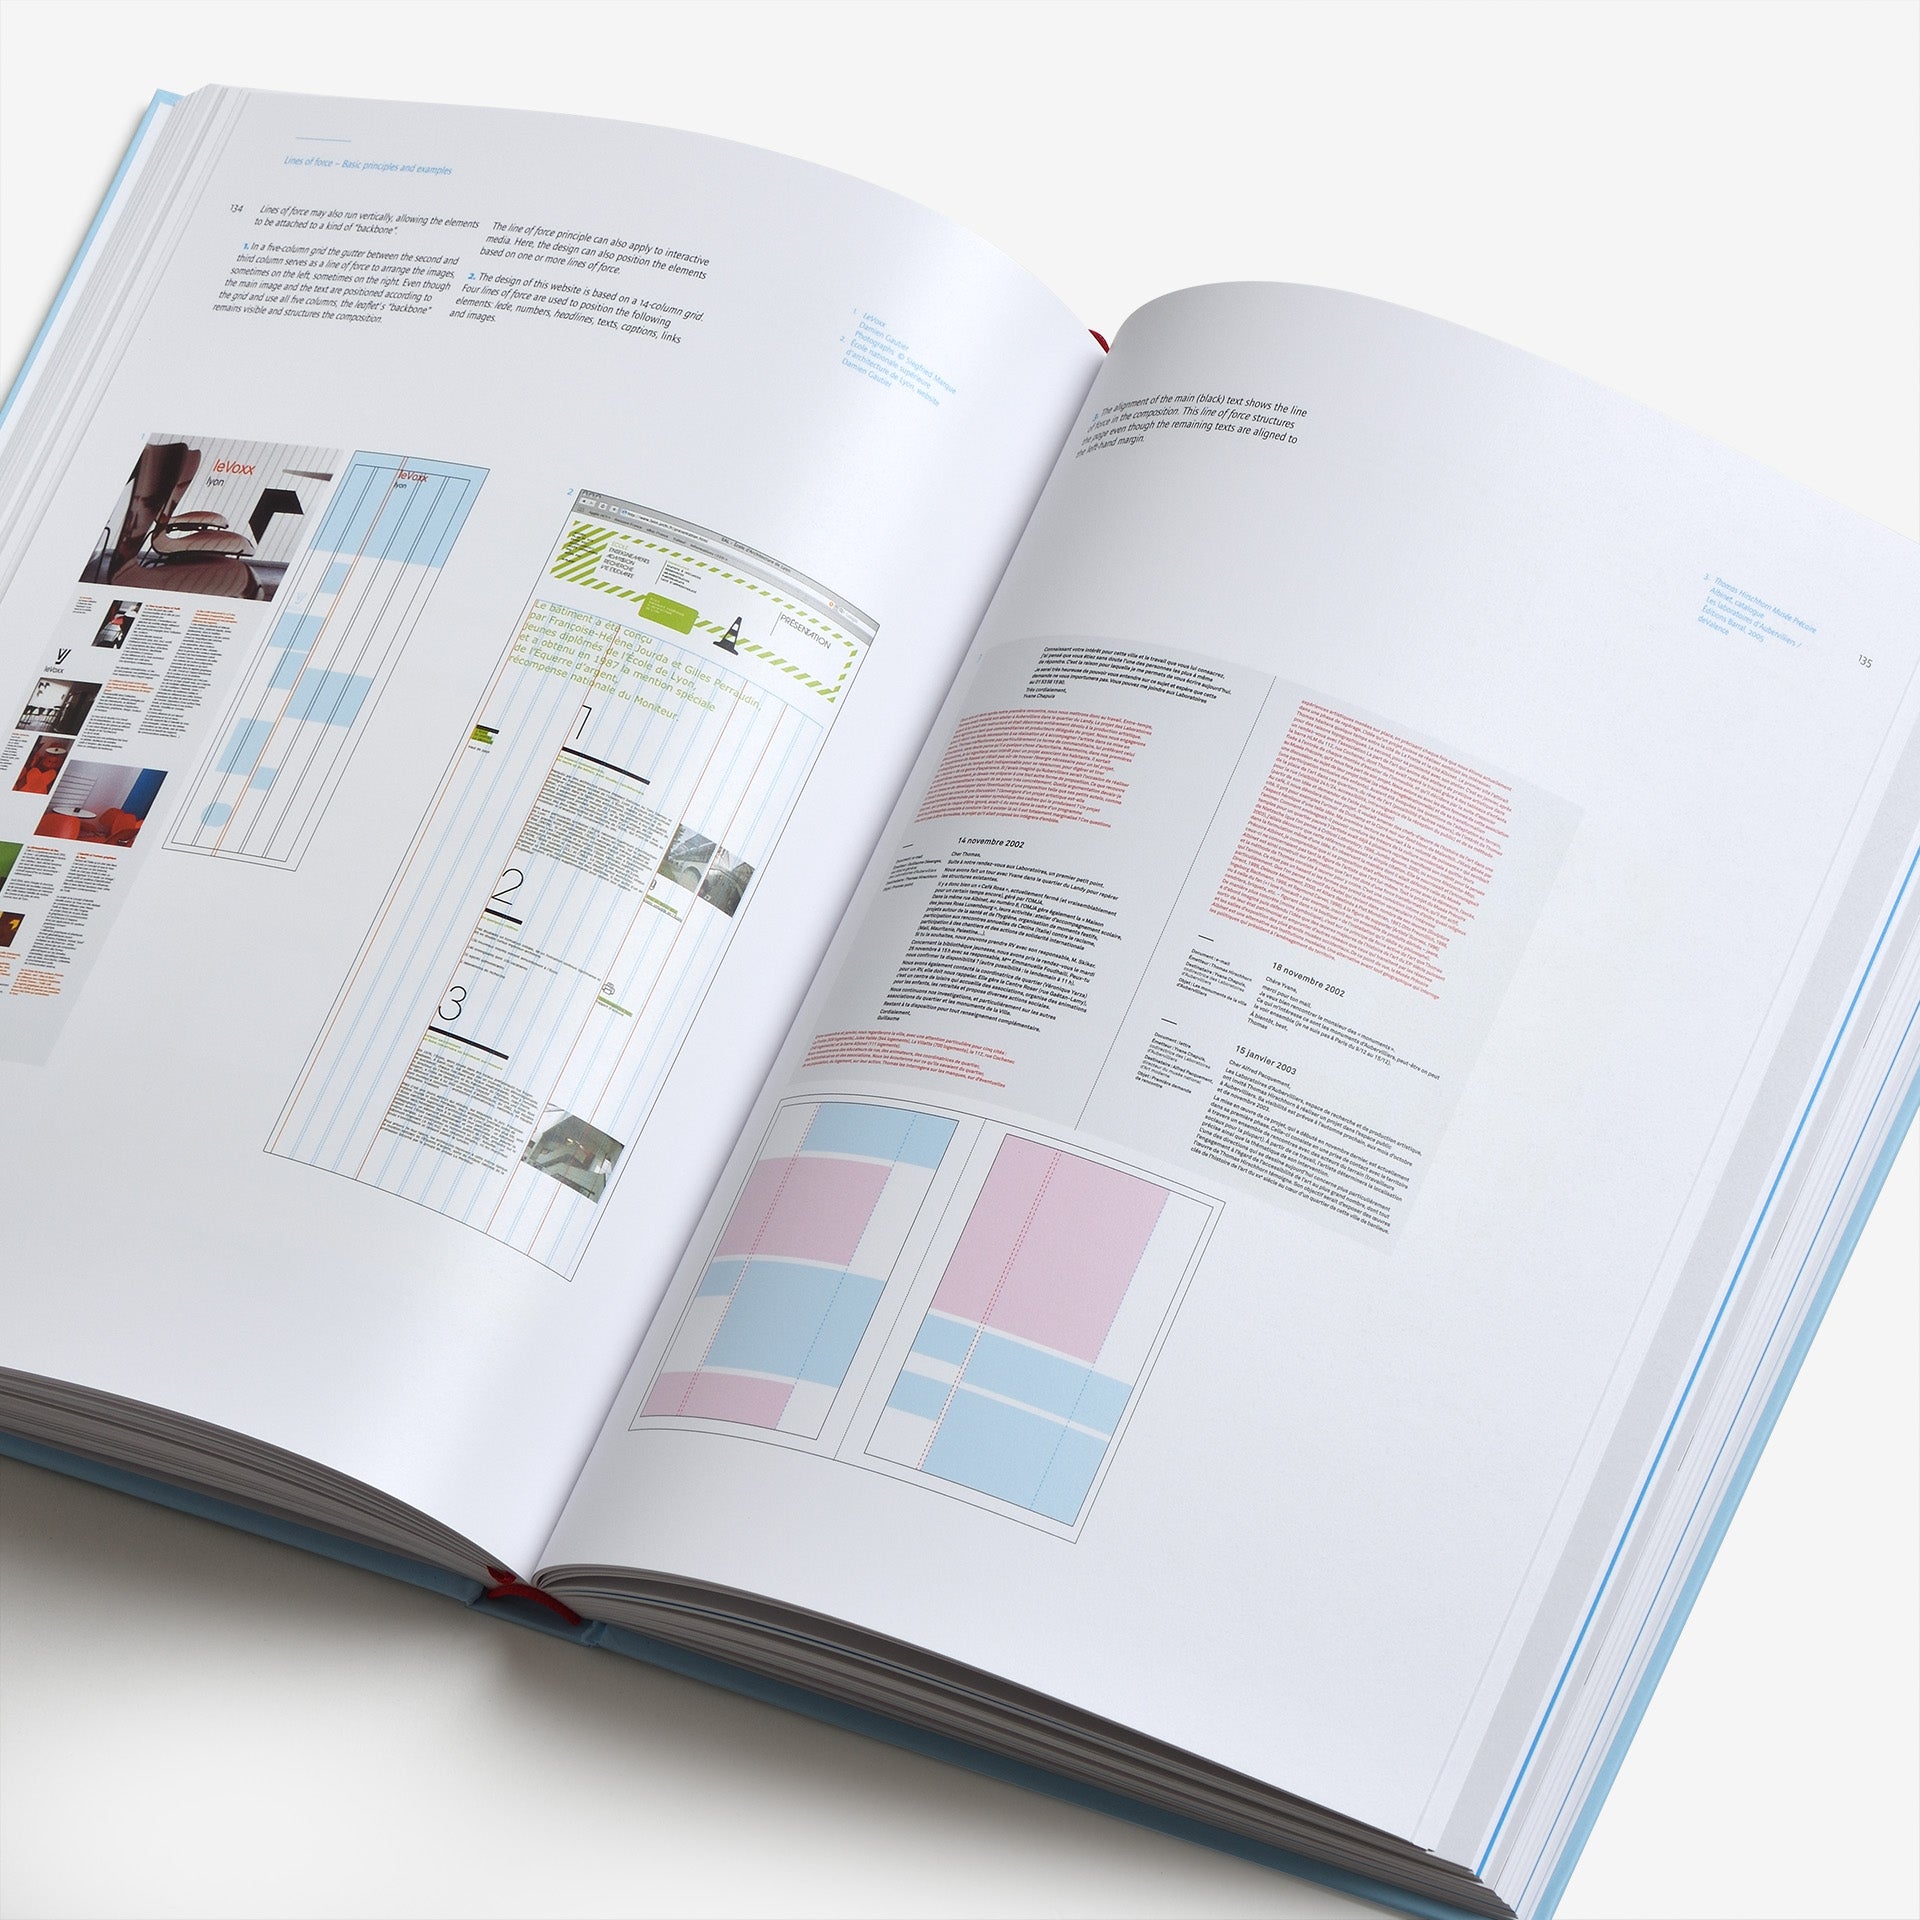 Design, Typography, etc: A Handbook